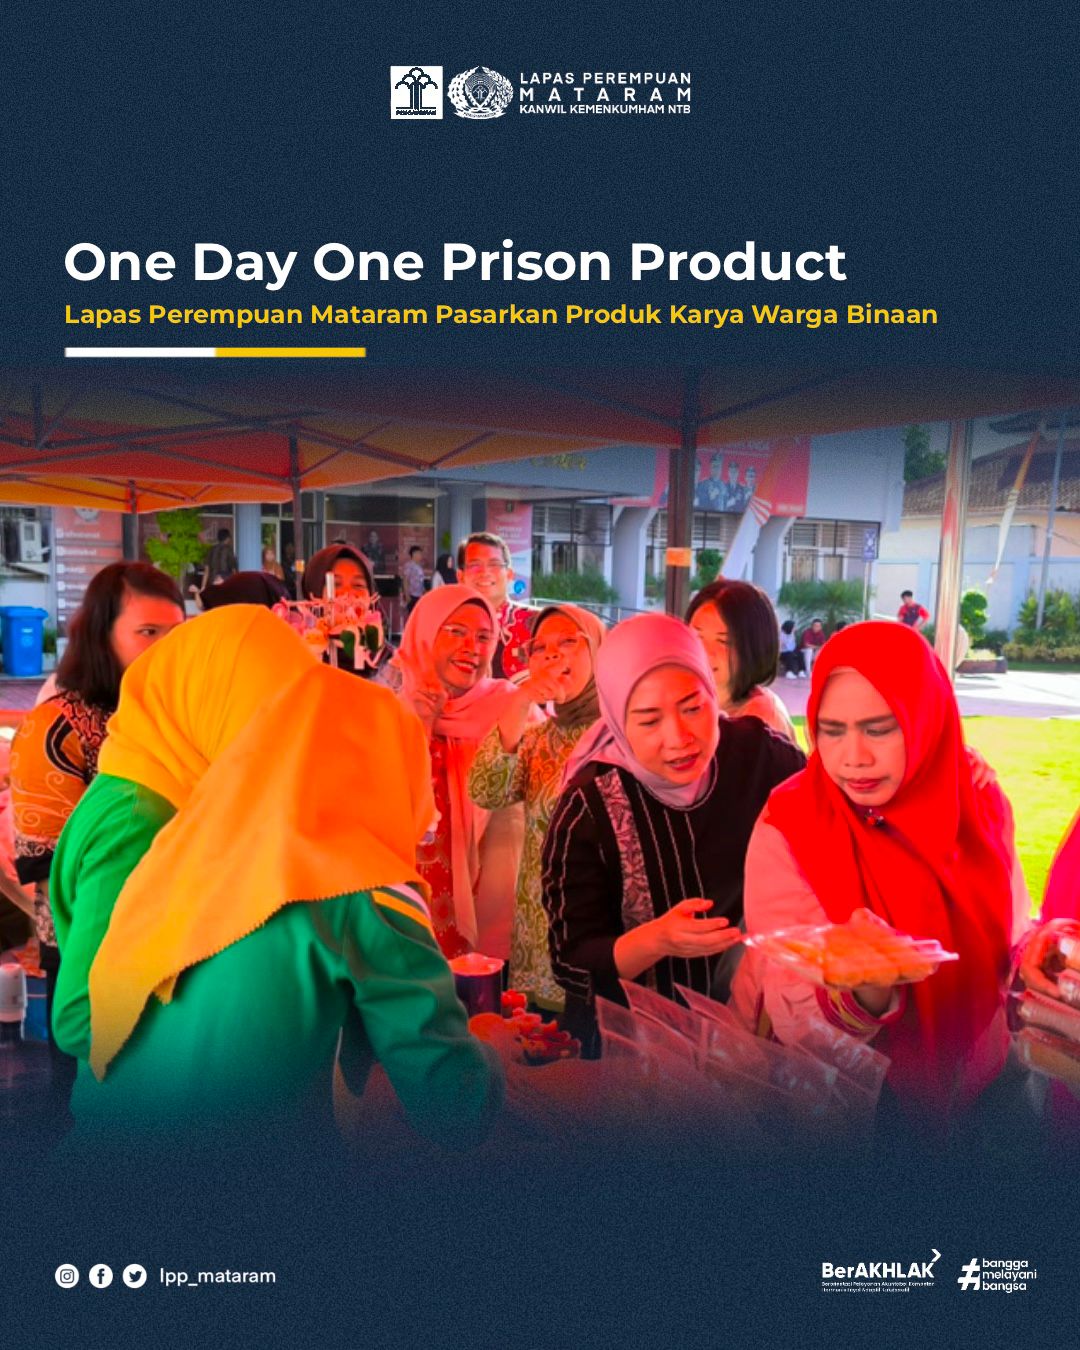 One Day One Prison Product, Lapas Perempuan Mataram Pasarkan Produk Karya Warga Binaan